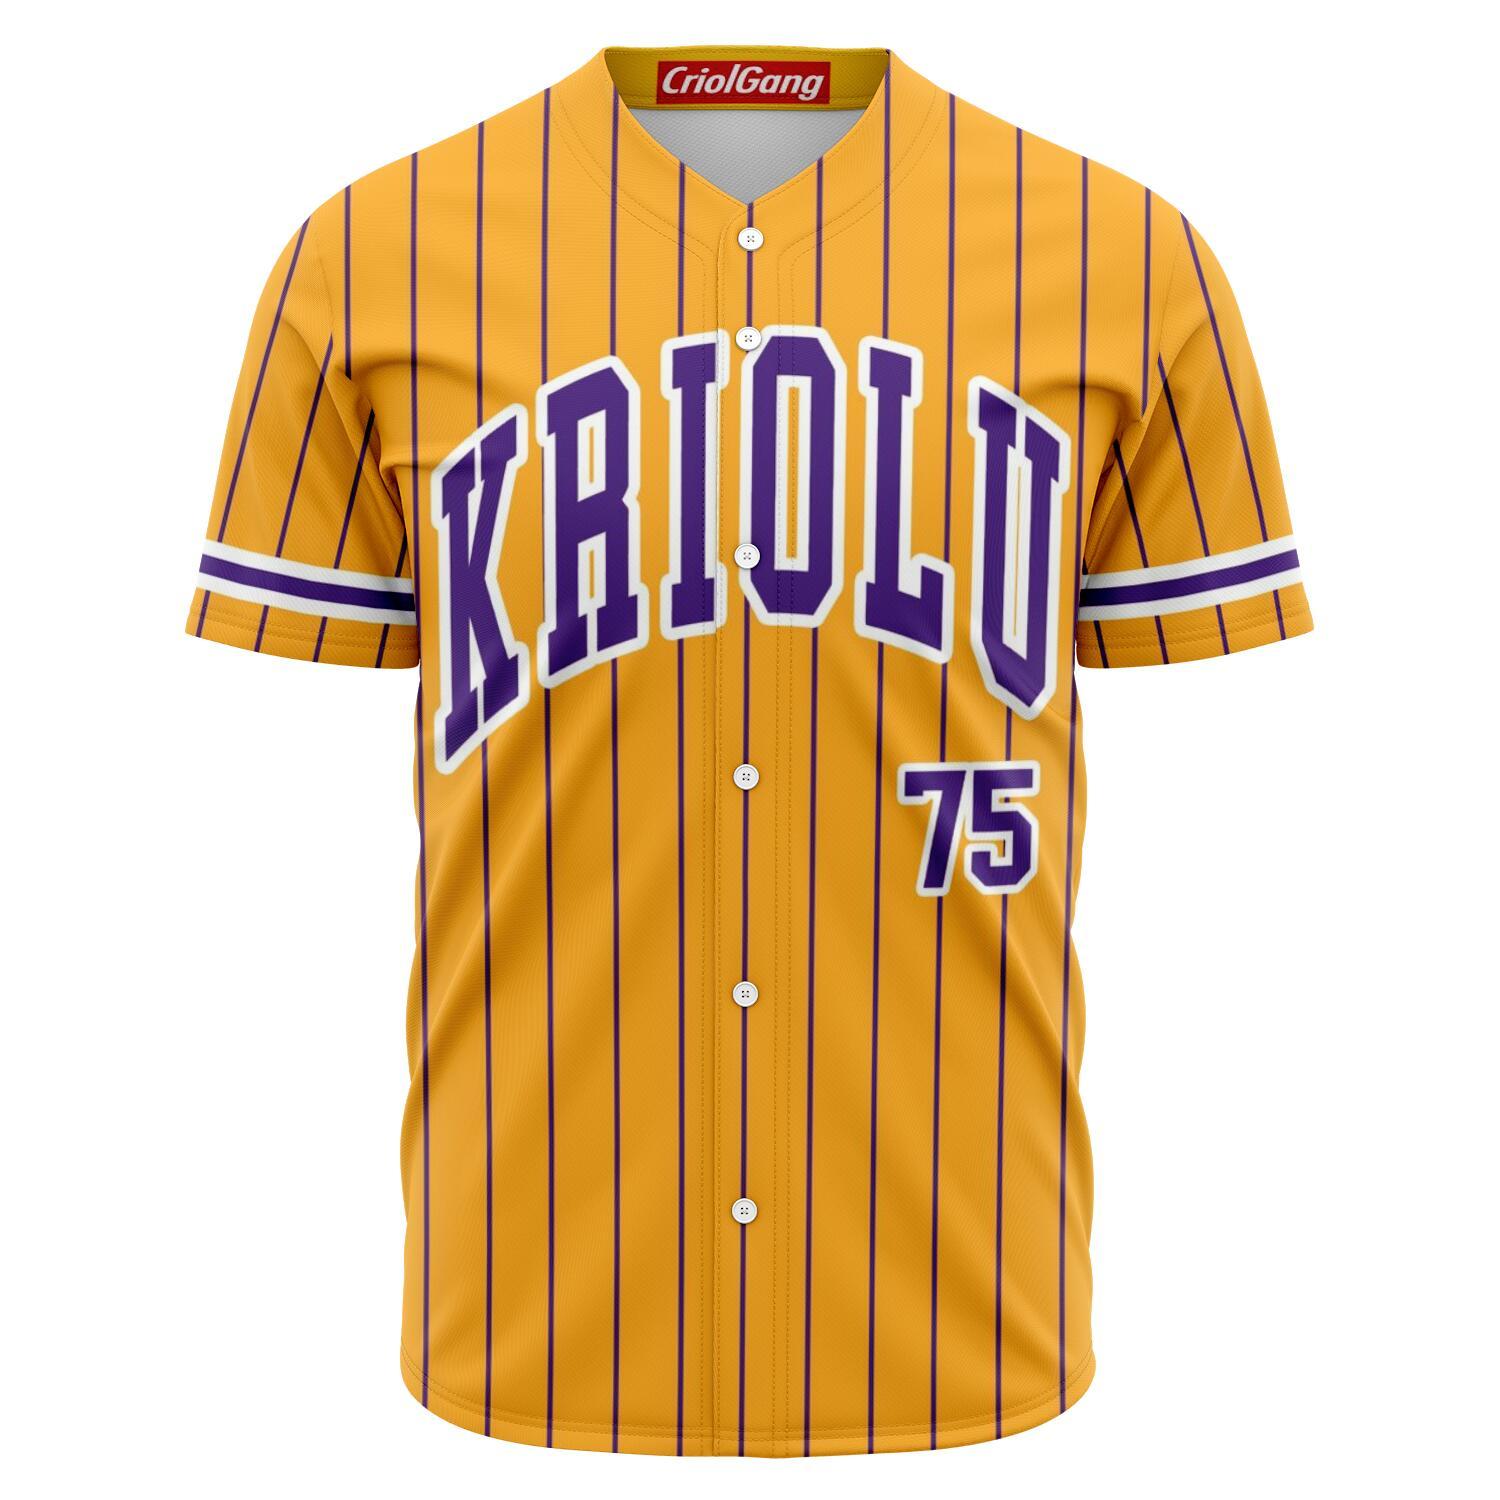 Cabo verde baseball jersey " KRIOLU/CABOGANG" yellow purple - CVC Streetwear